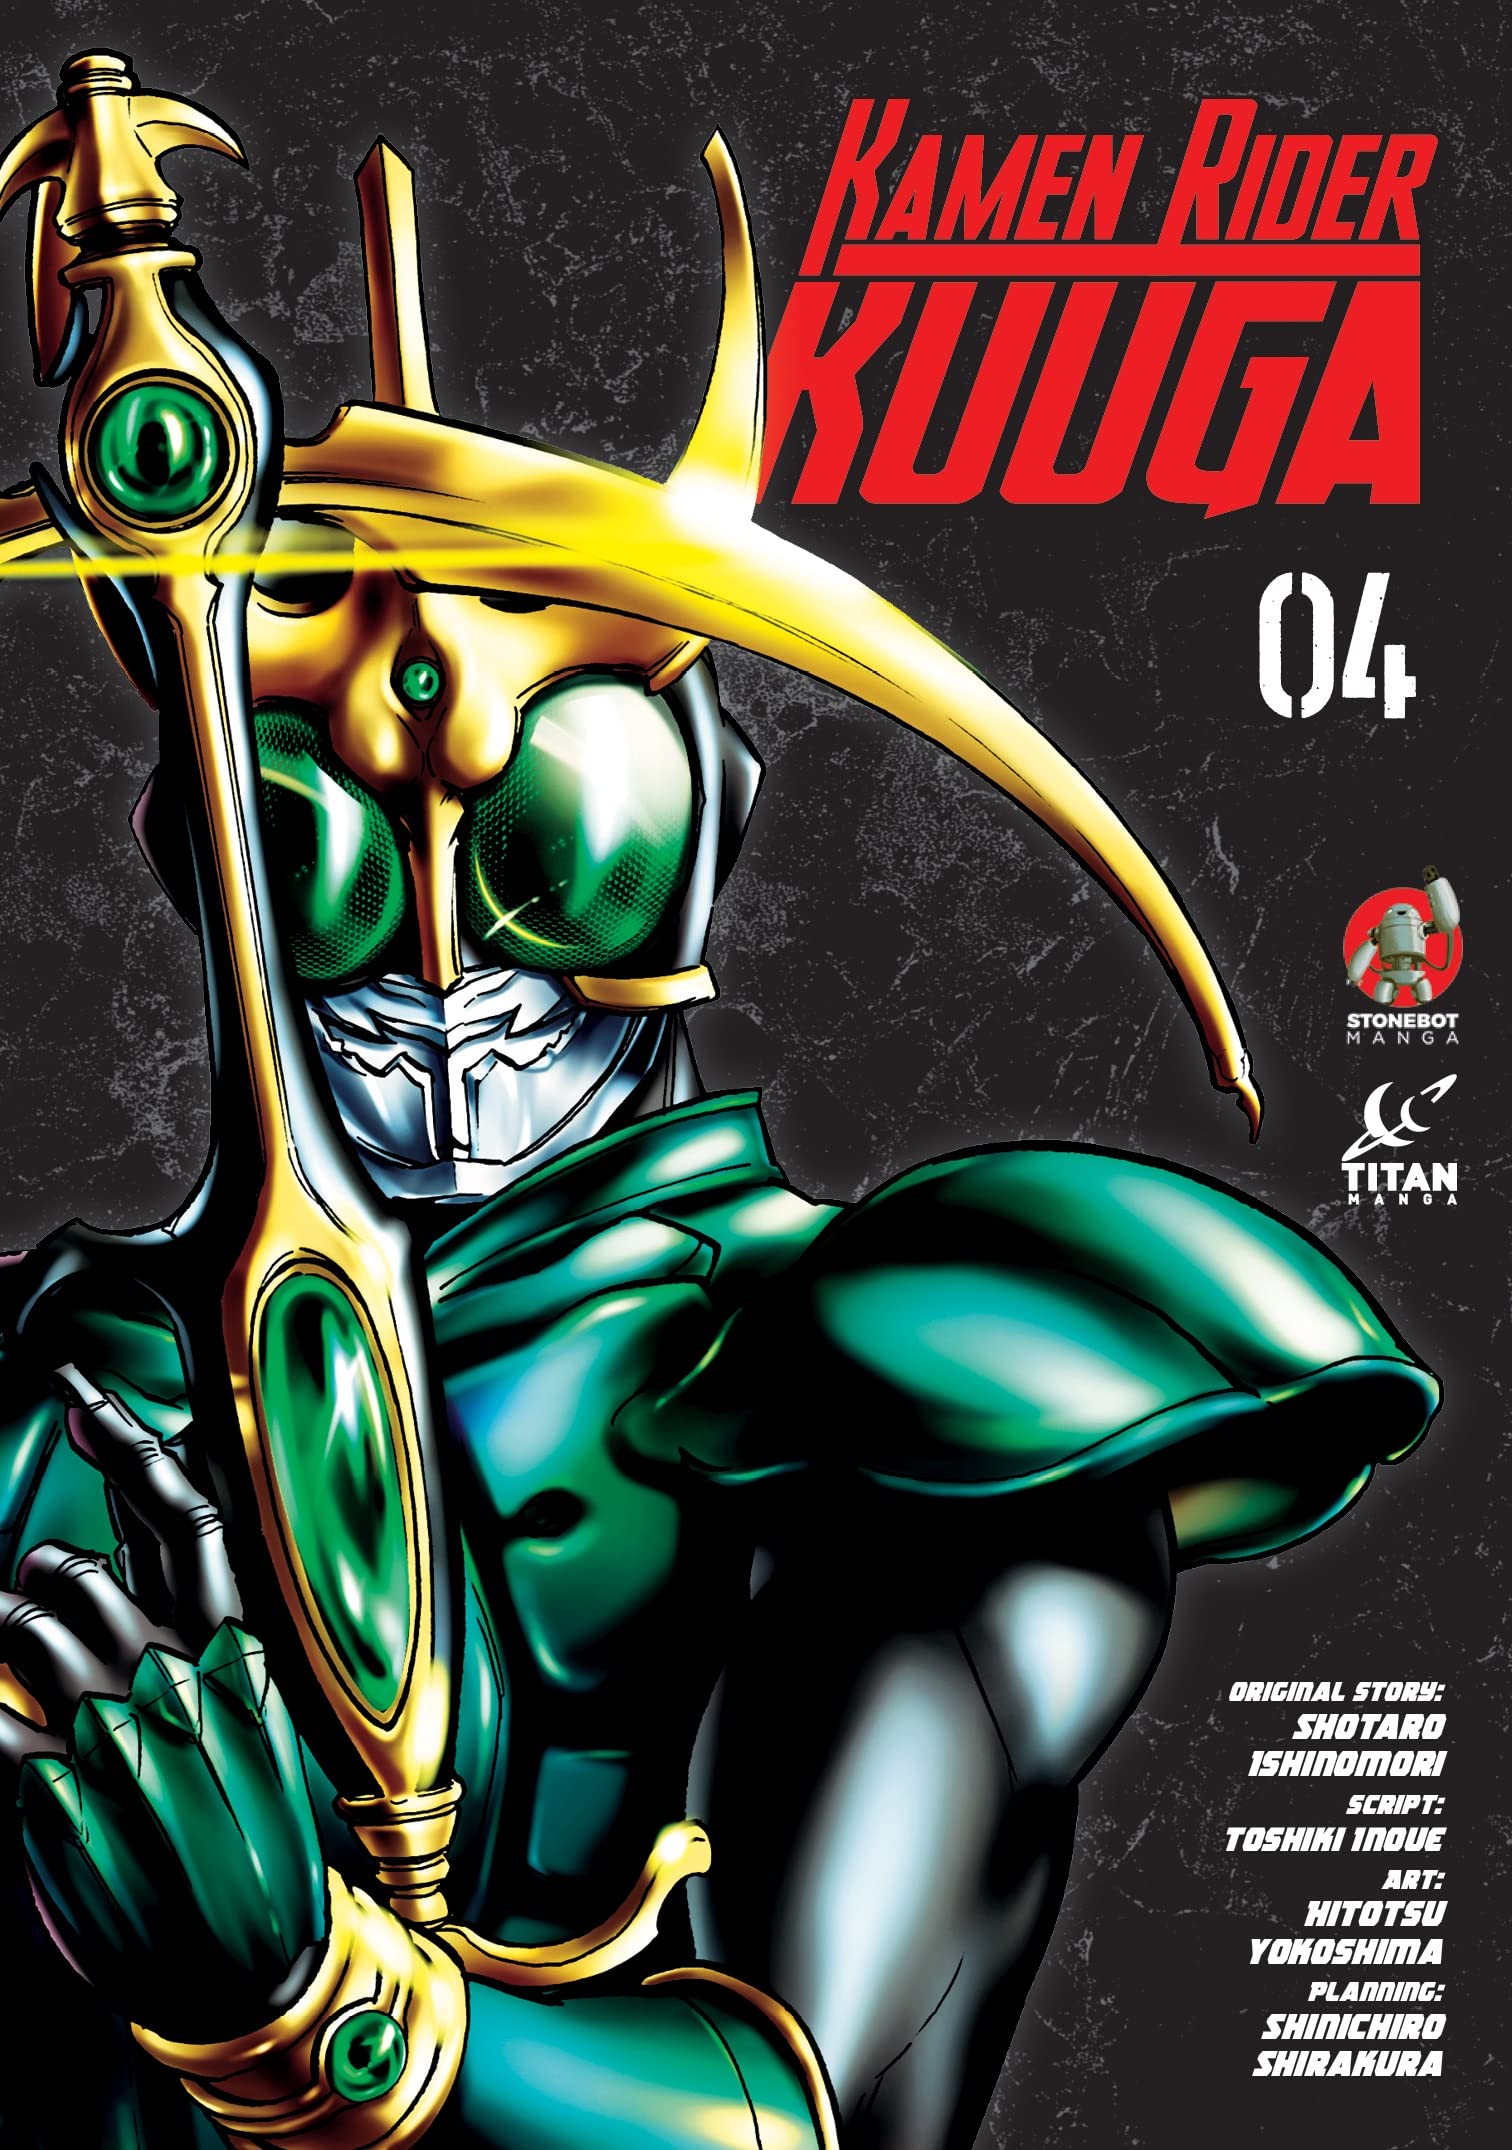 Kamen Rider Kuuga Vol. 04